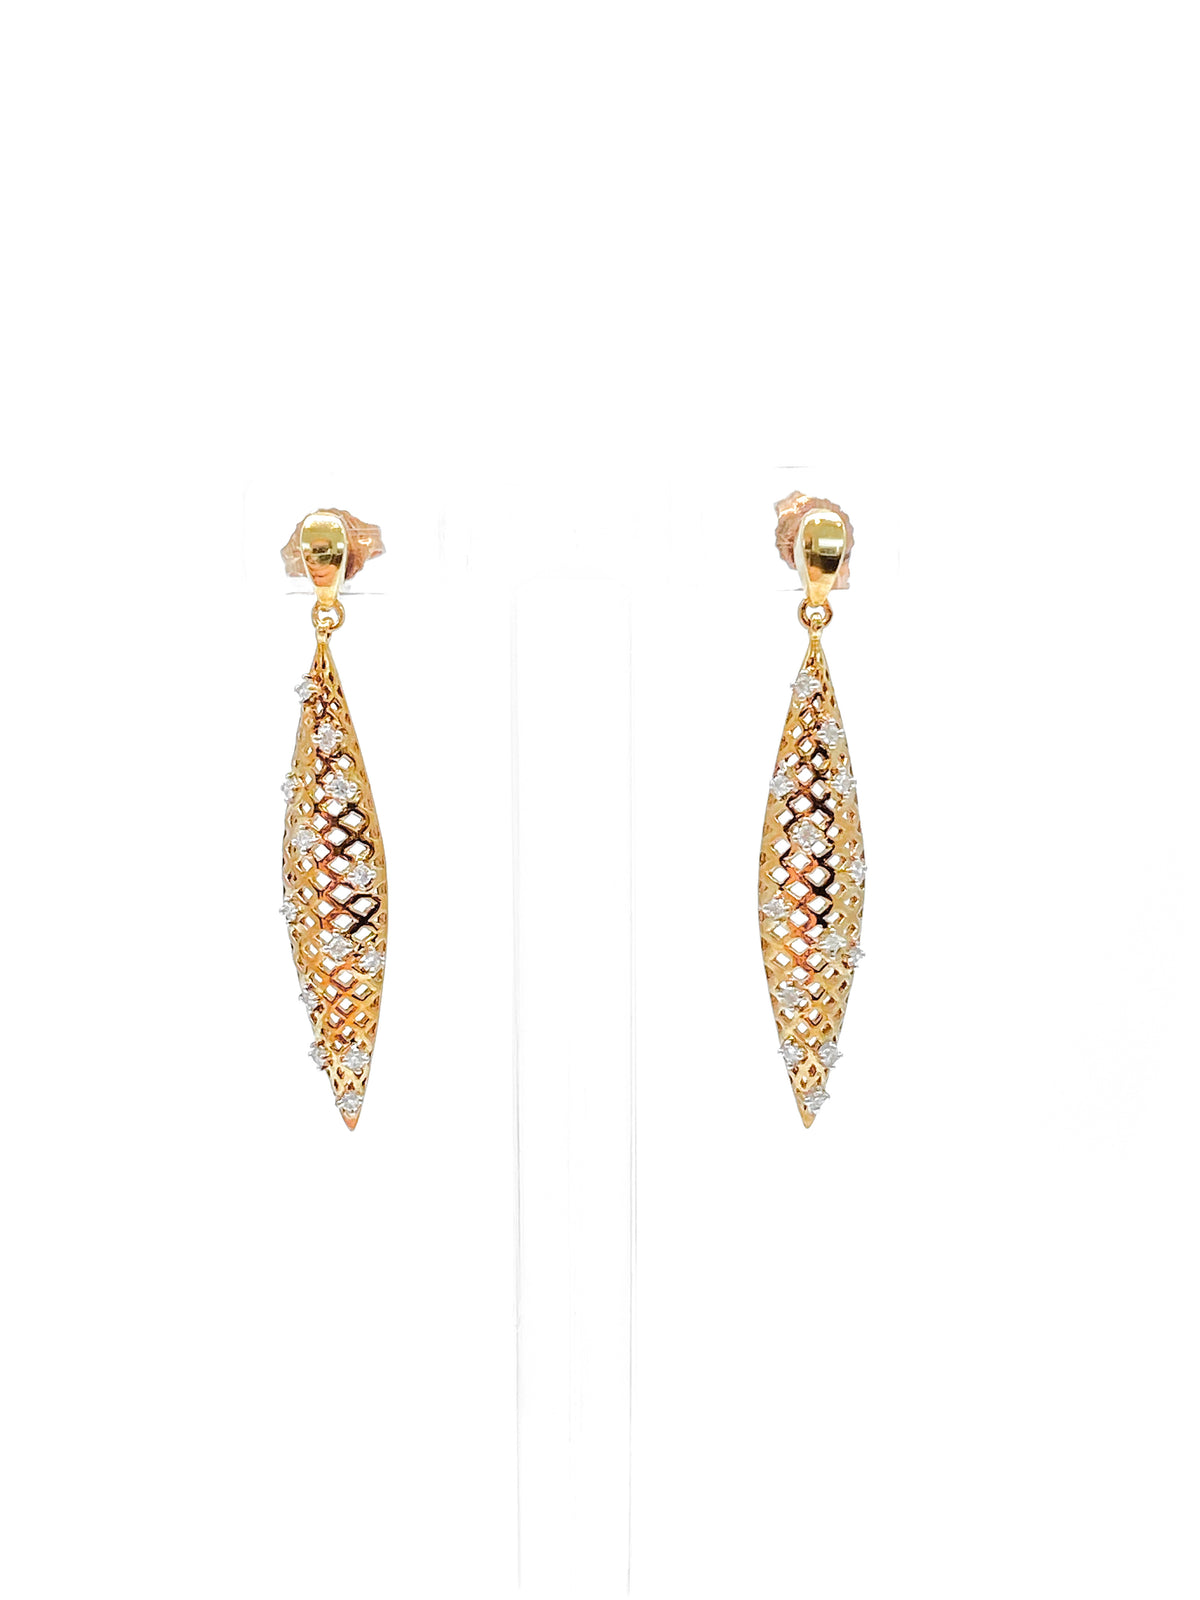 10K Yellow Gold 0.20cttw Diamond Dangle/Drop Earrings